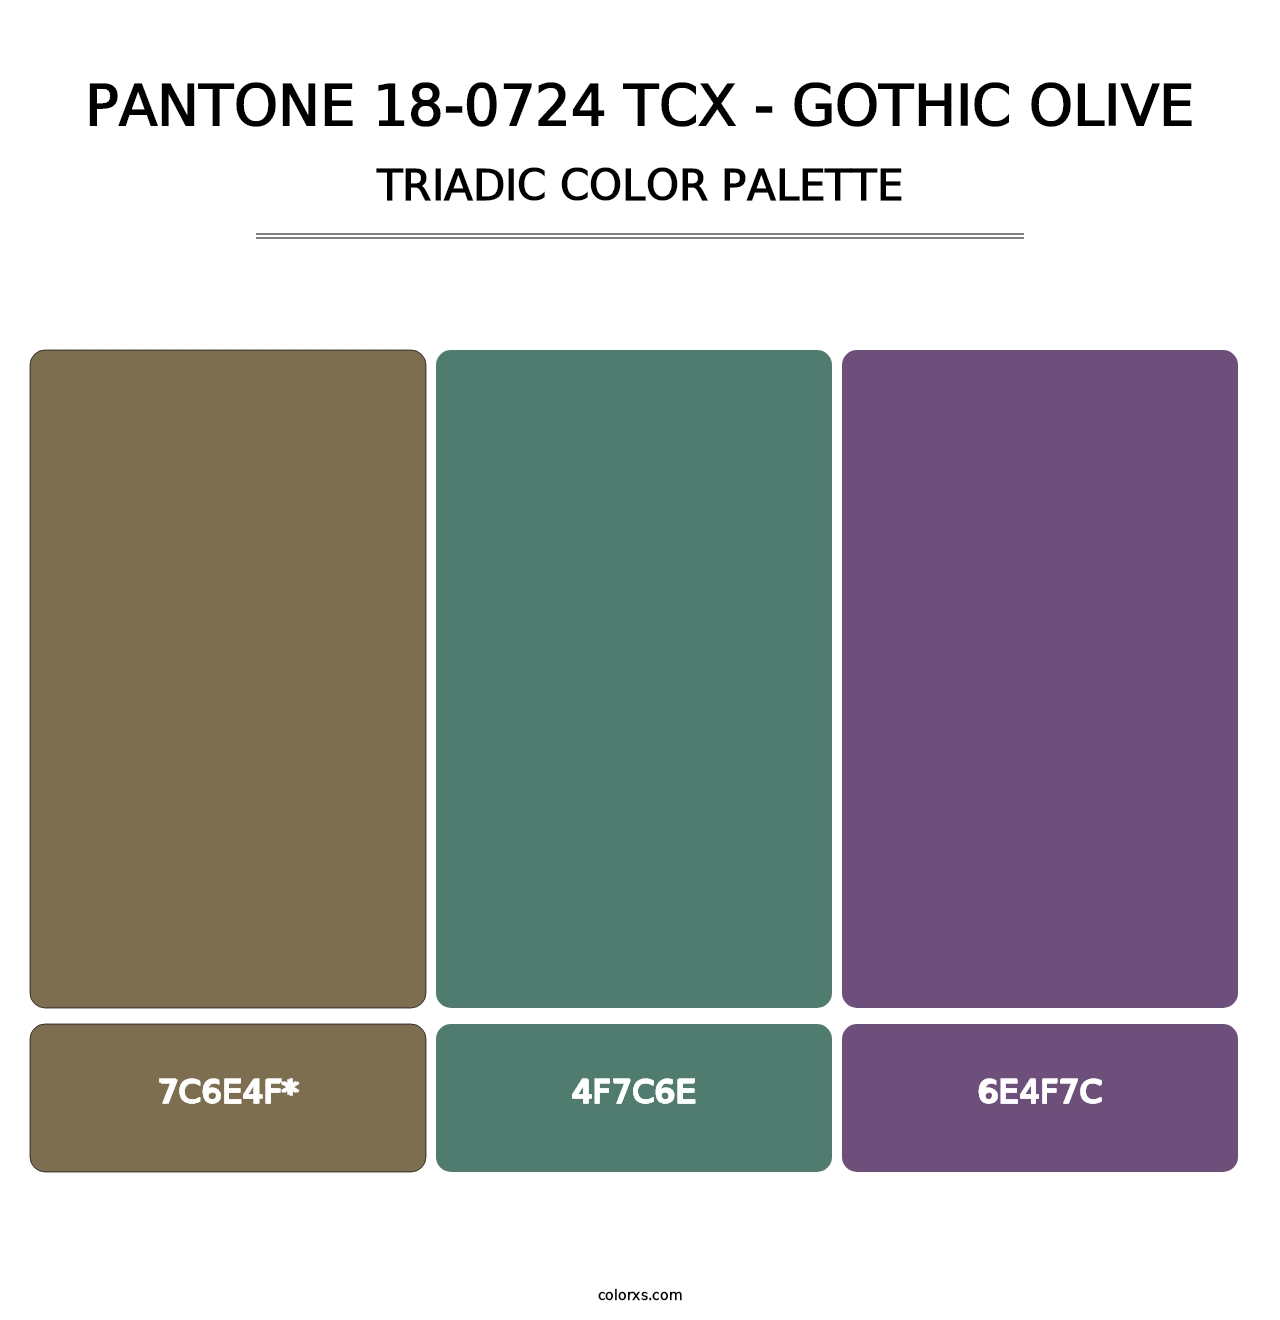 PANTONE 18-0724 TCX - Gothic Olive - Triadic Color Palette